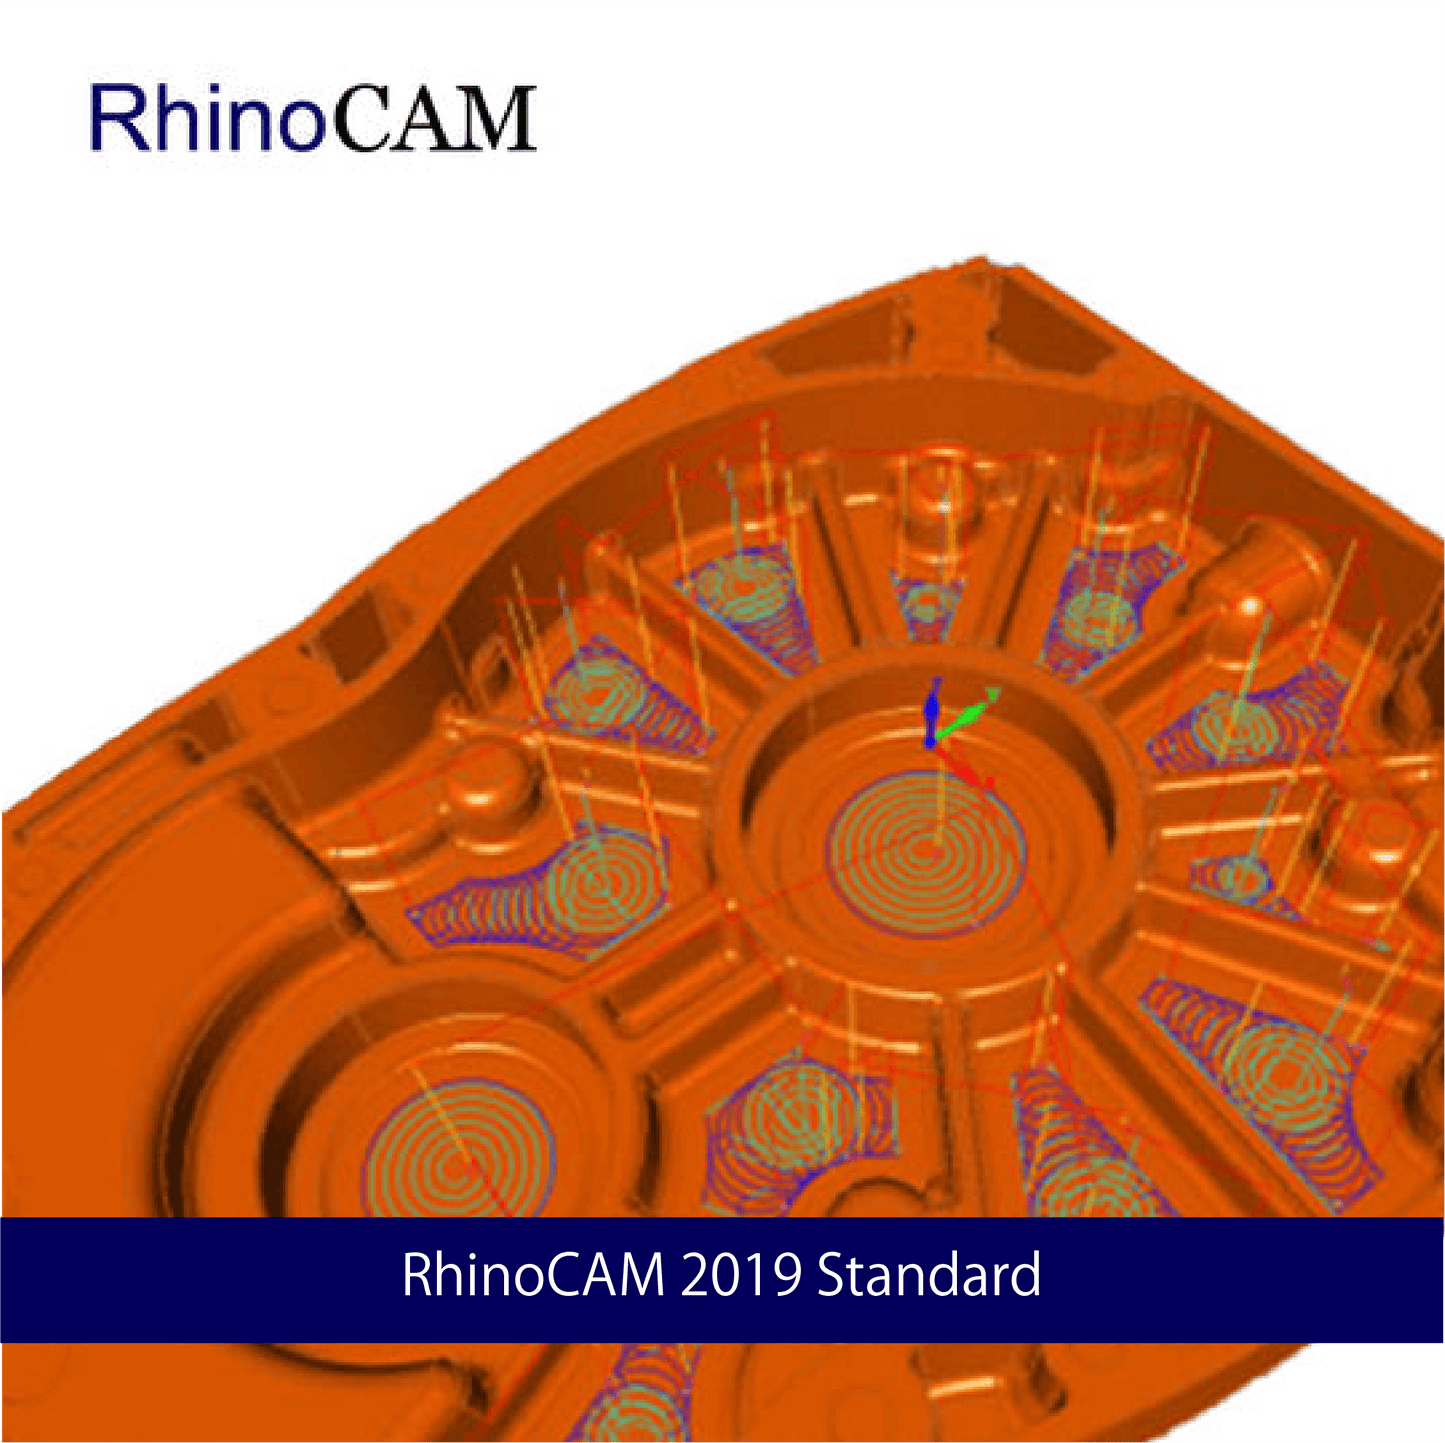 RhinoCAM 2019 Standard